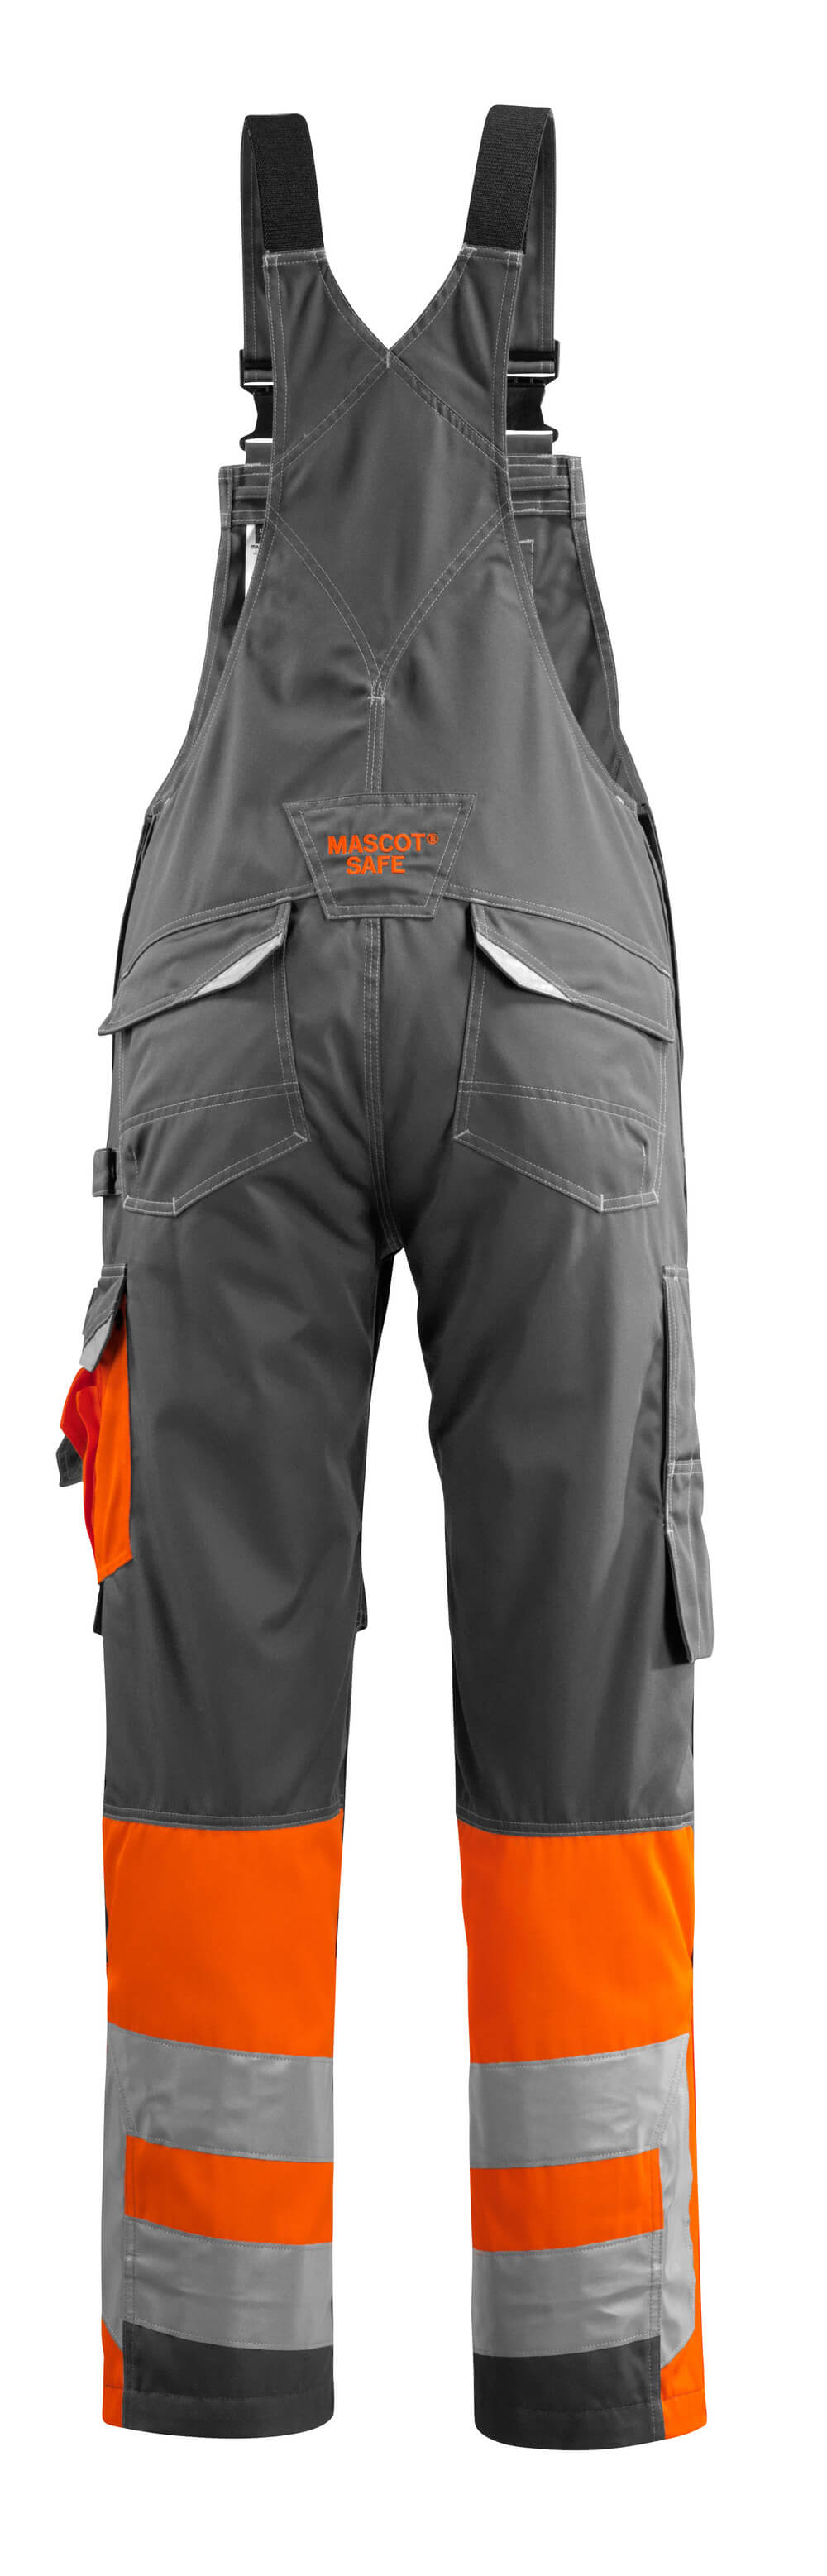 Mascot SAFE SUPREME  Sunderland Bib & Brace with kneepad pockets 15669 dark anthracite/hi-vis orange